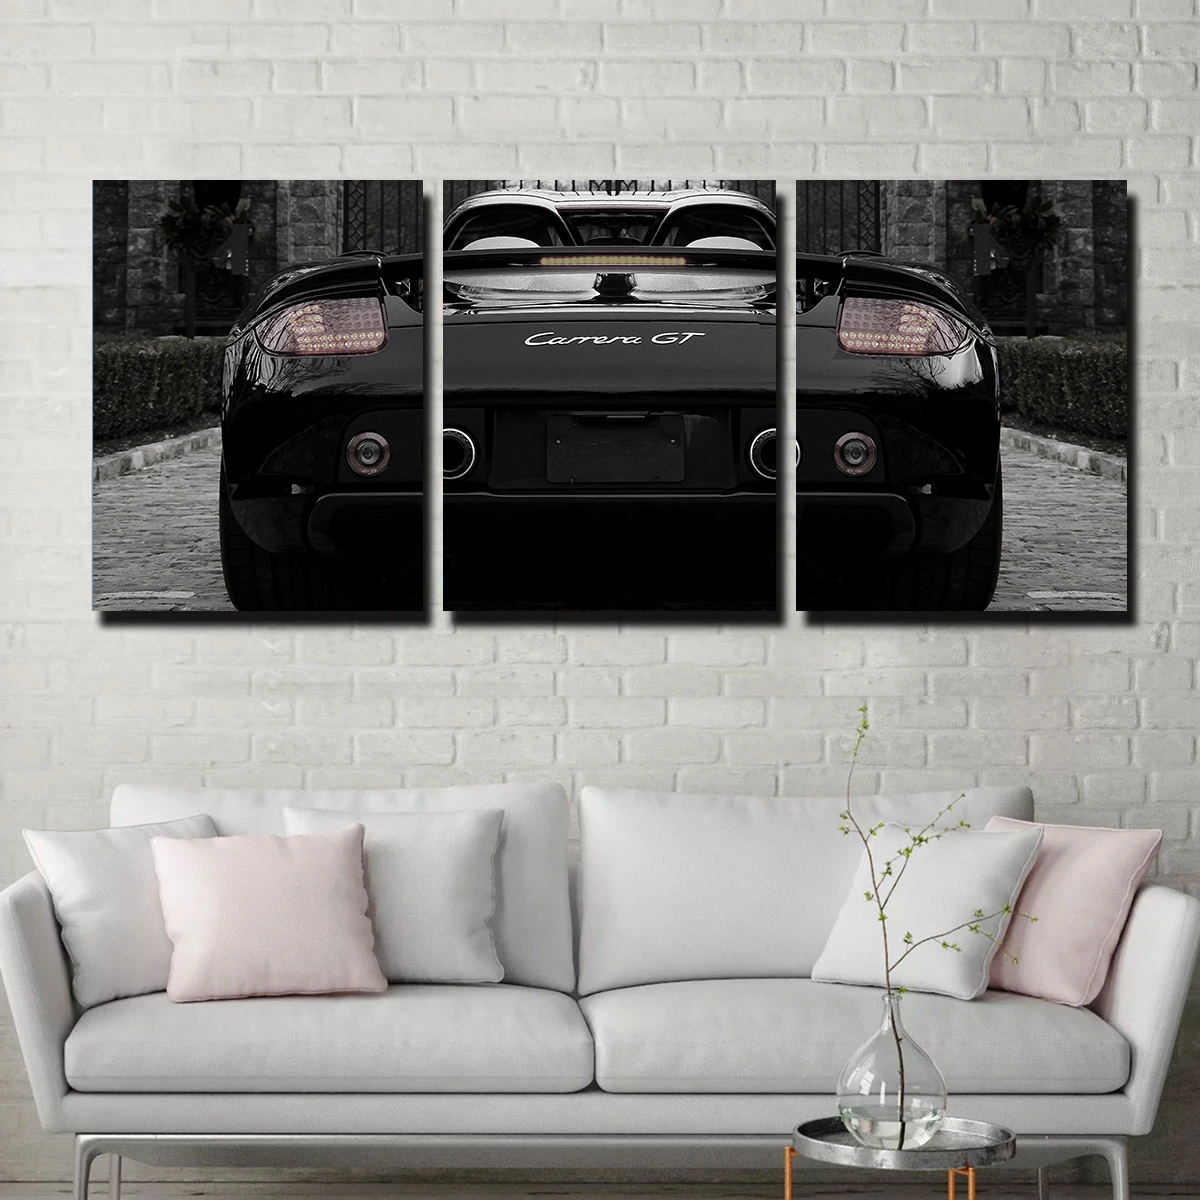 Porsche Carrera GT Canvas Set